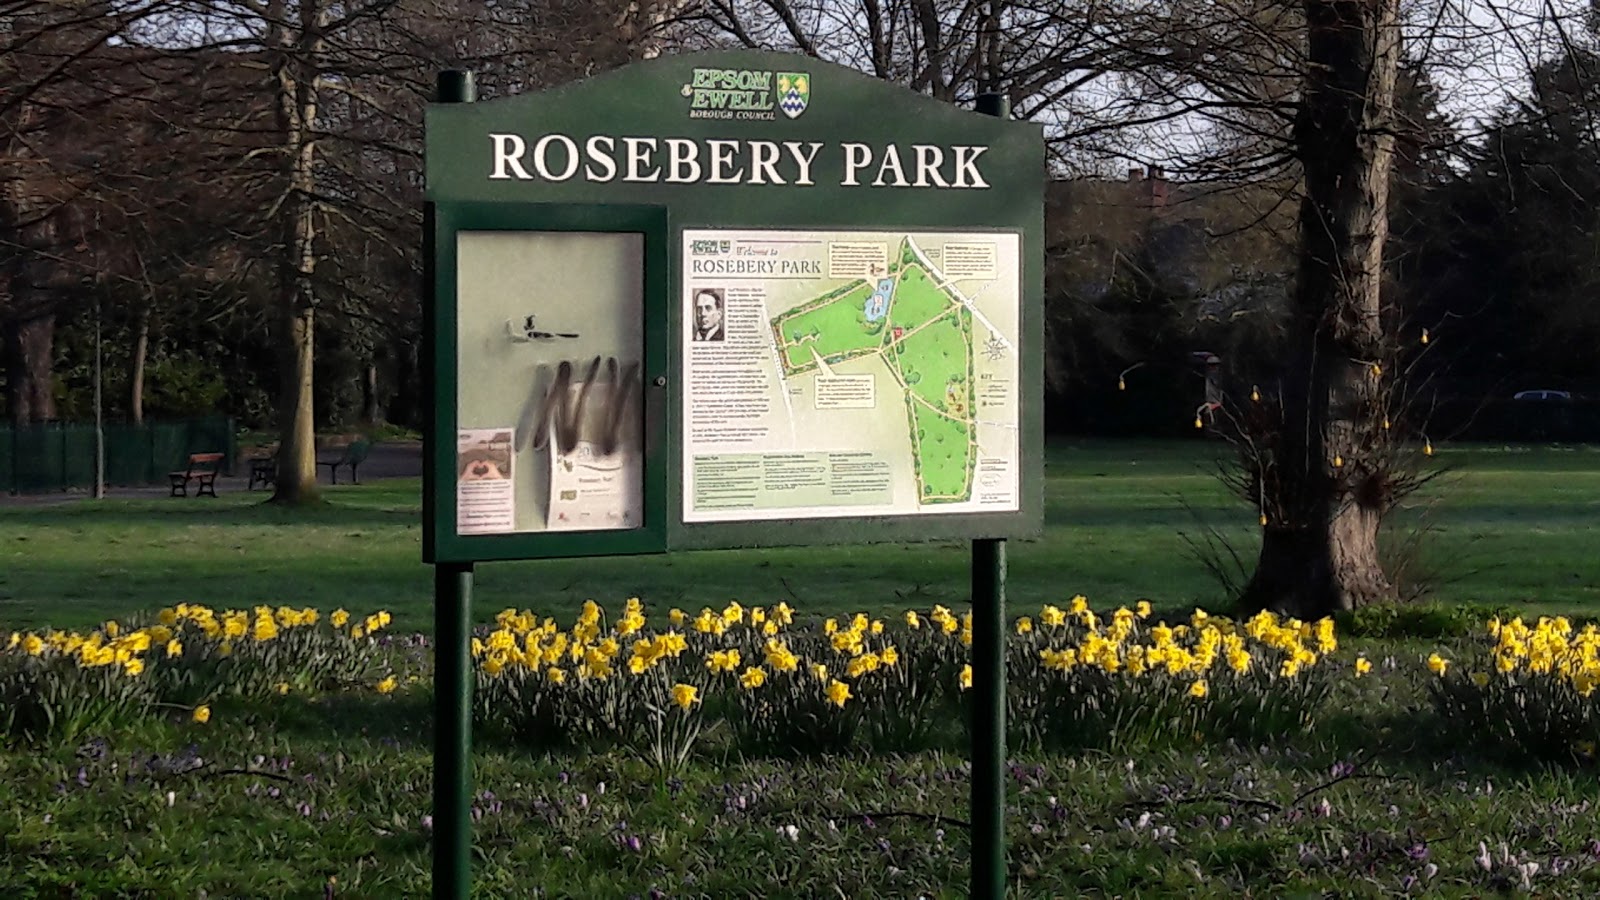 https://whatremovals.co.uk/wp-content/uploads/2022/02/Rosebery Park-300x169.jpeg